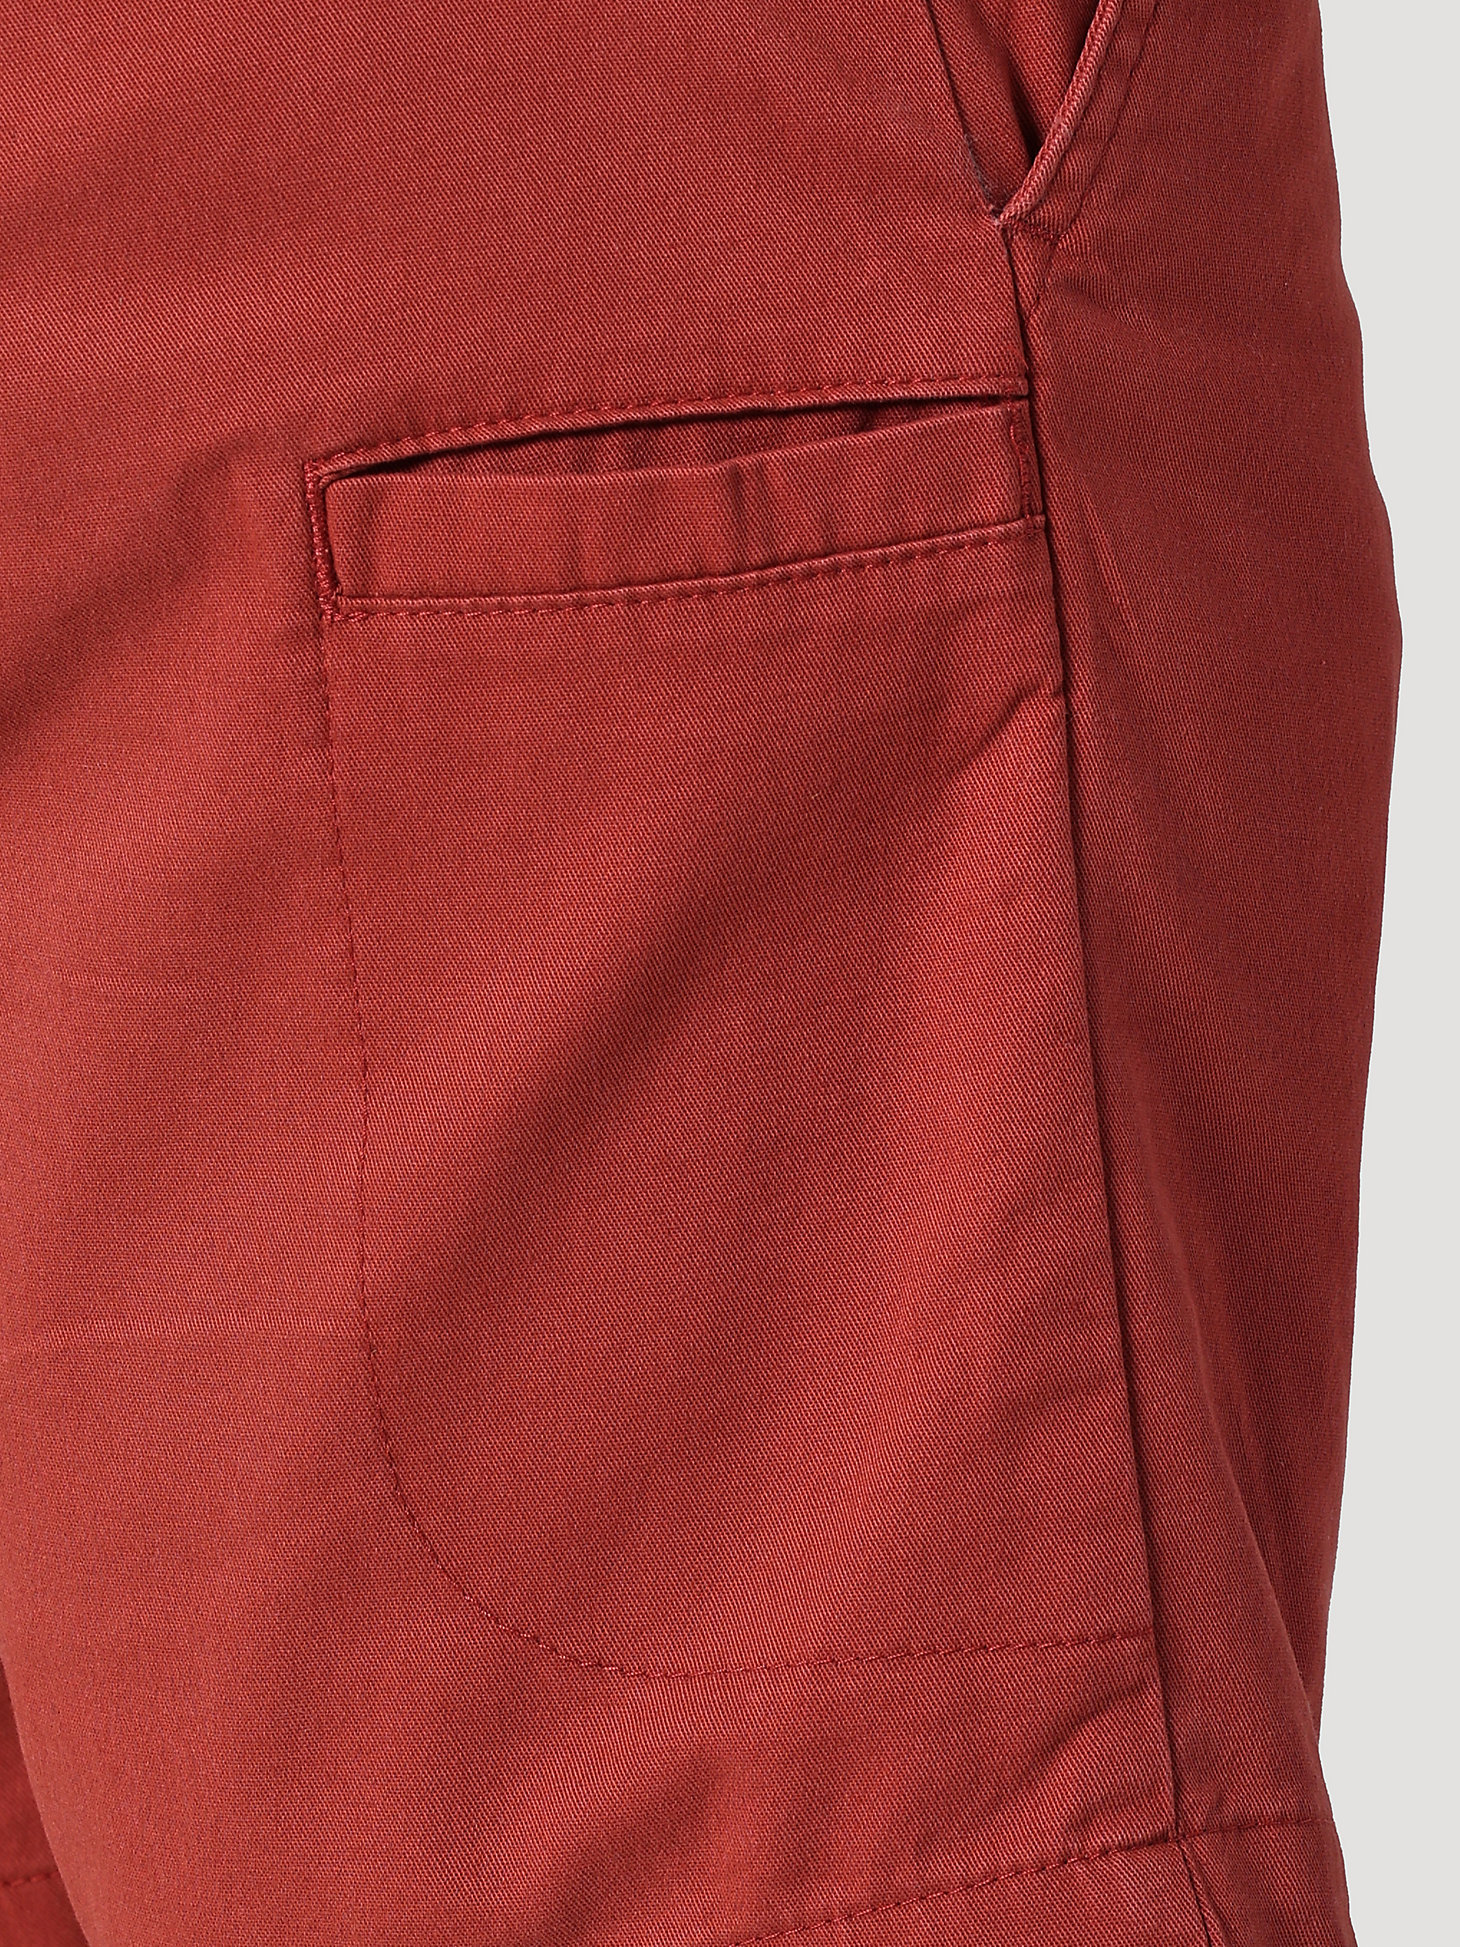 Wrangler Rugged Wear® Flat Front Chino Short in Dark Red alternative view 4